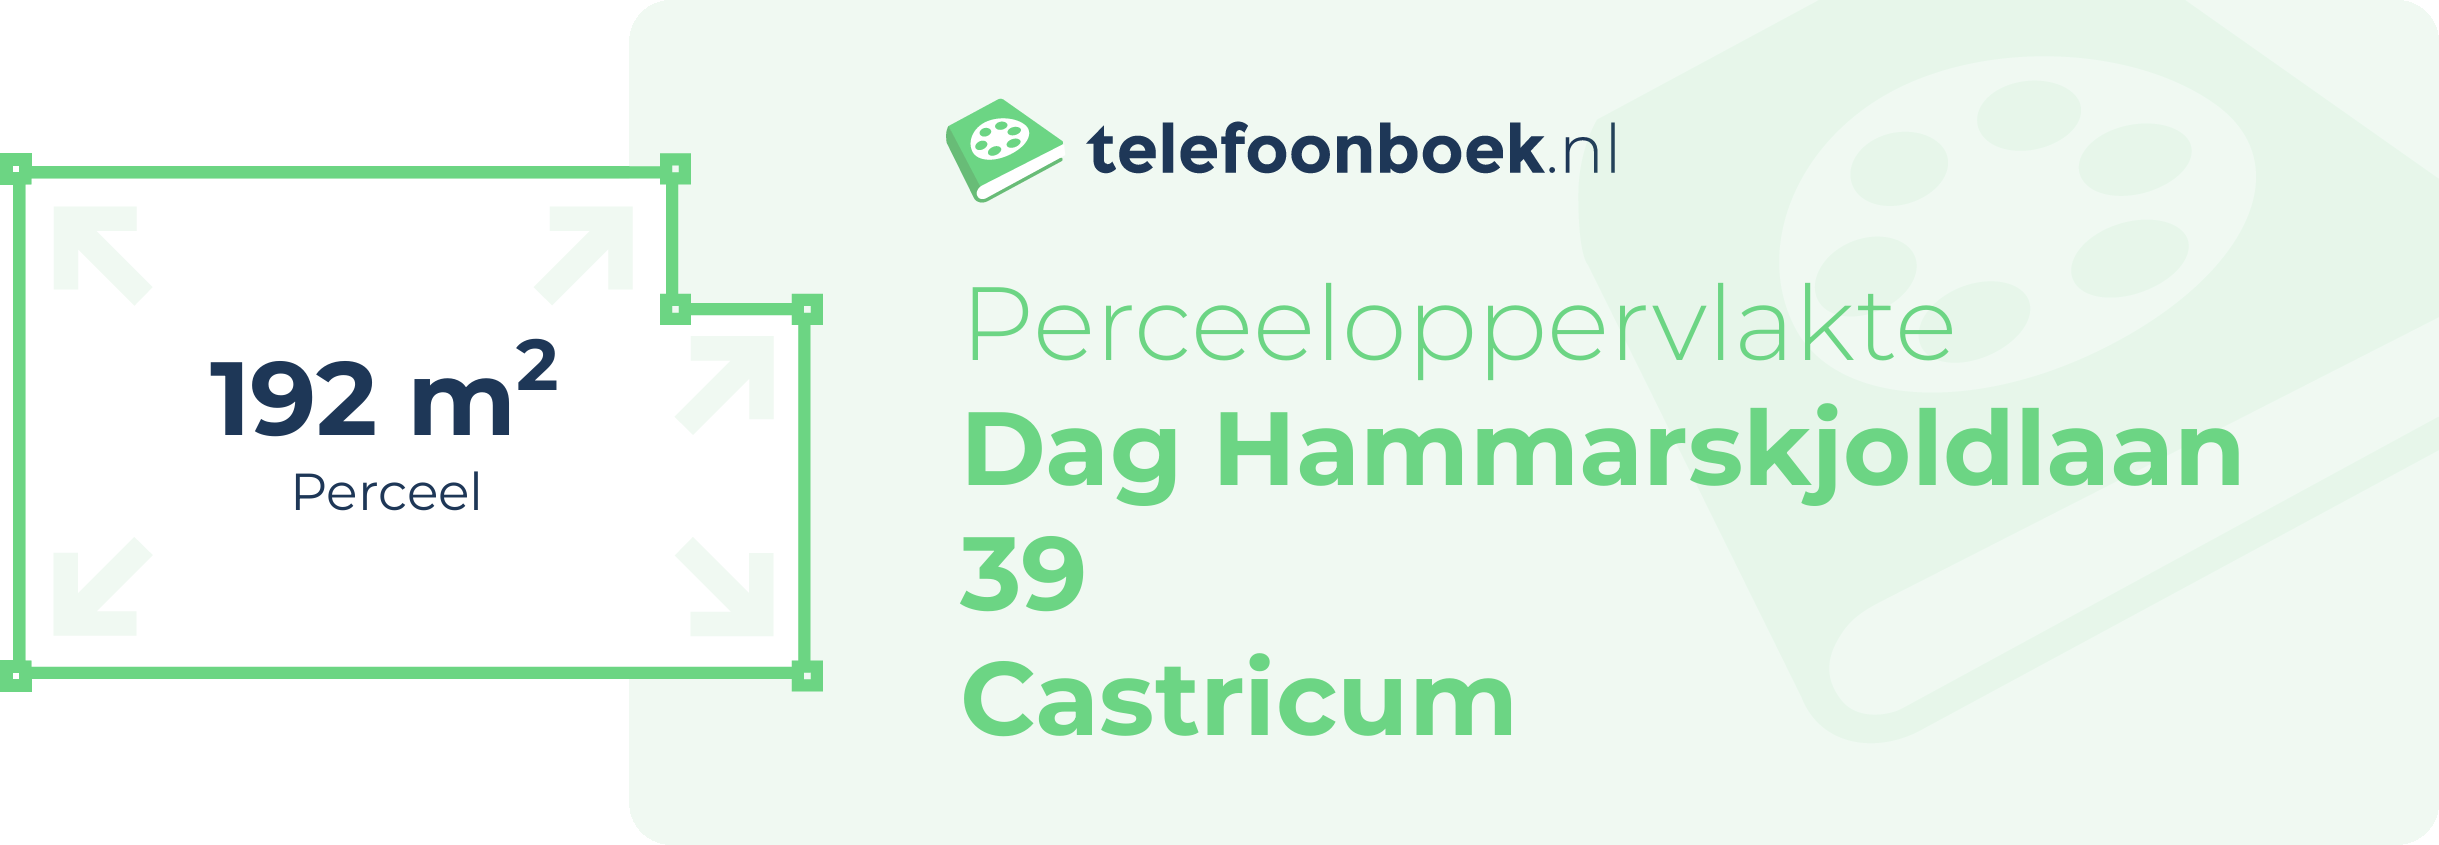 Perceeloppervlakte Dag Hammarskjoldlaan 39 Castricum